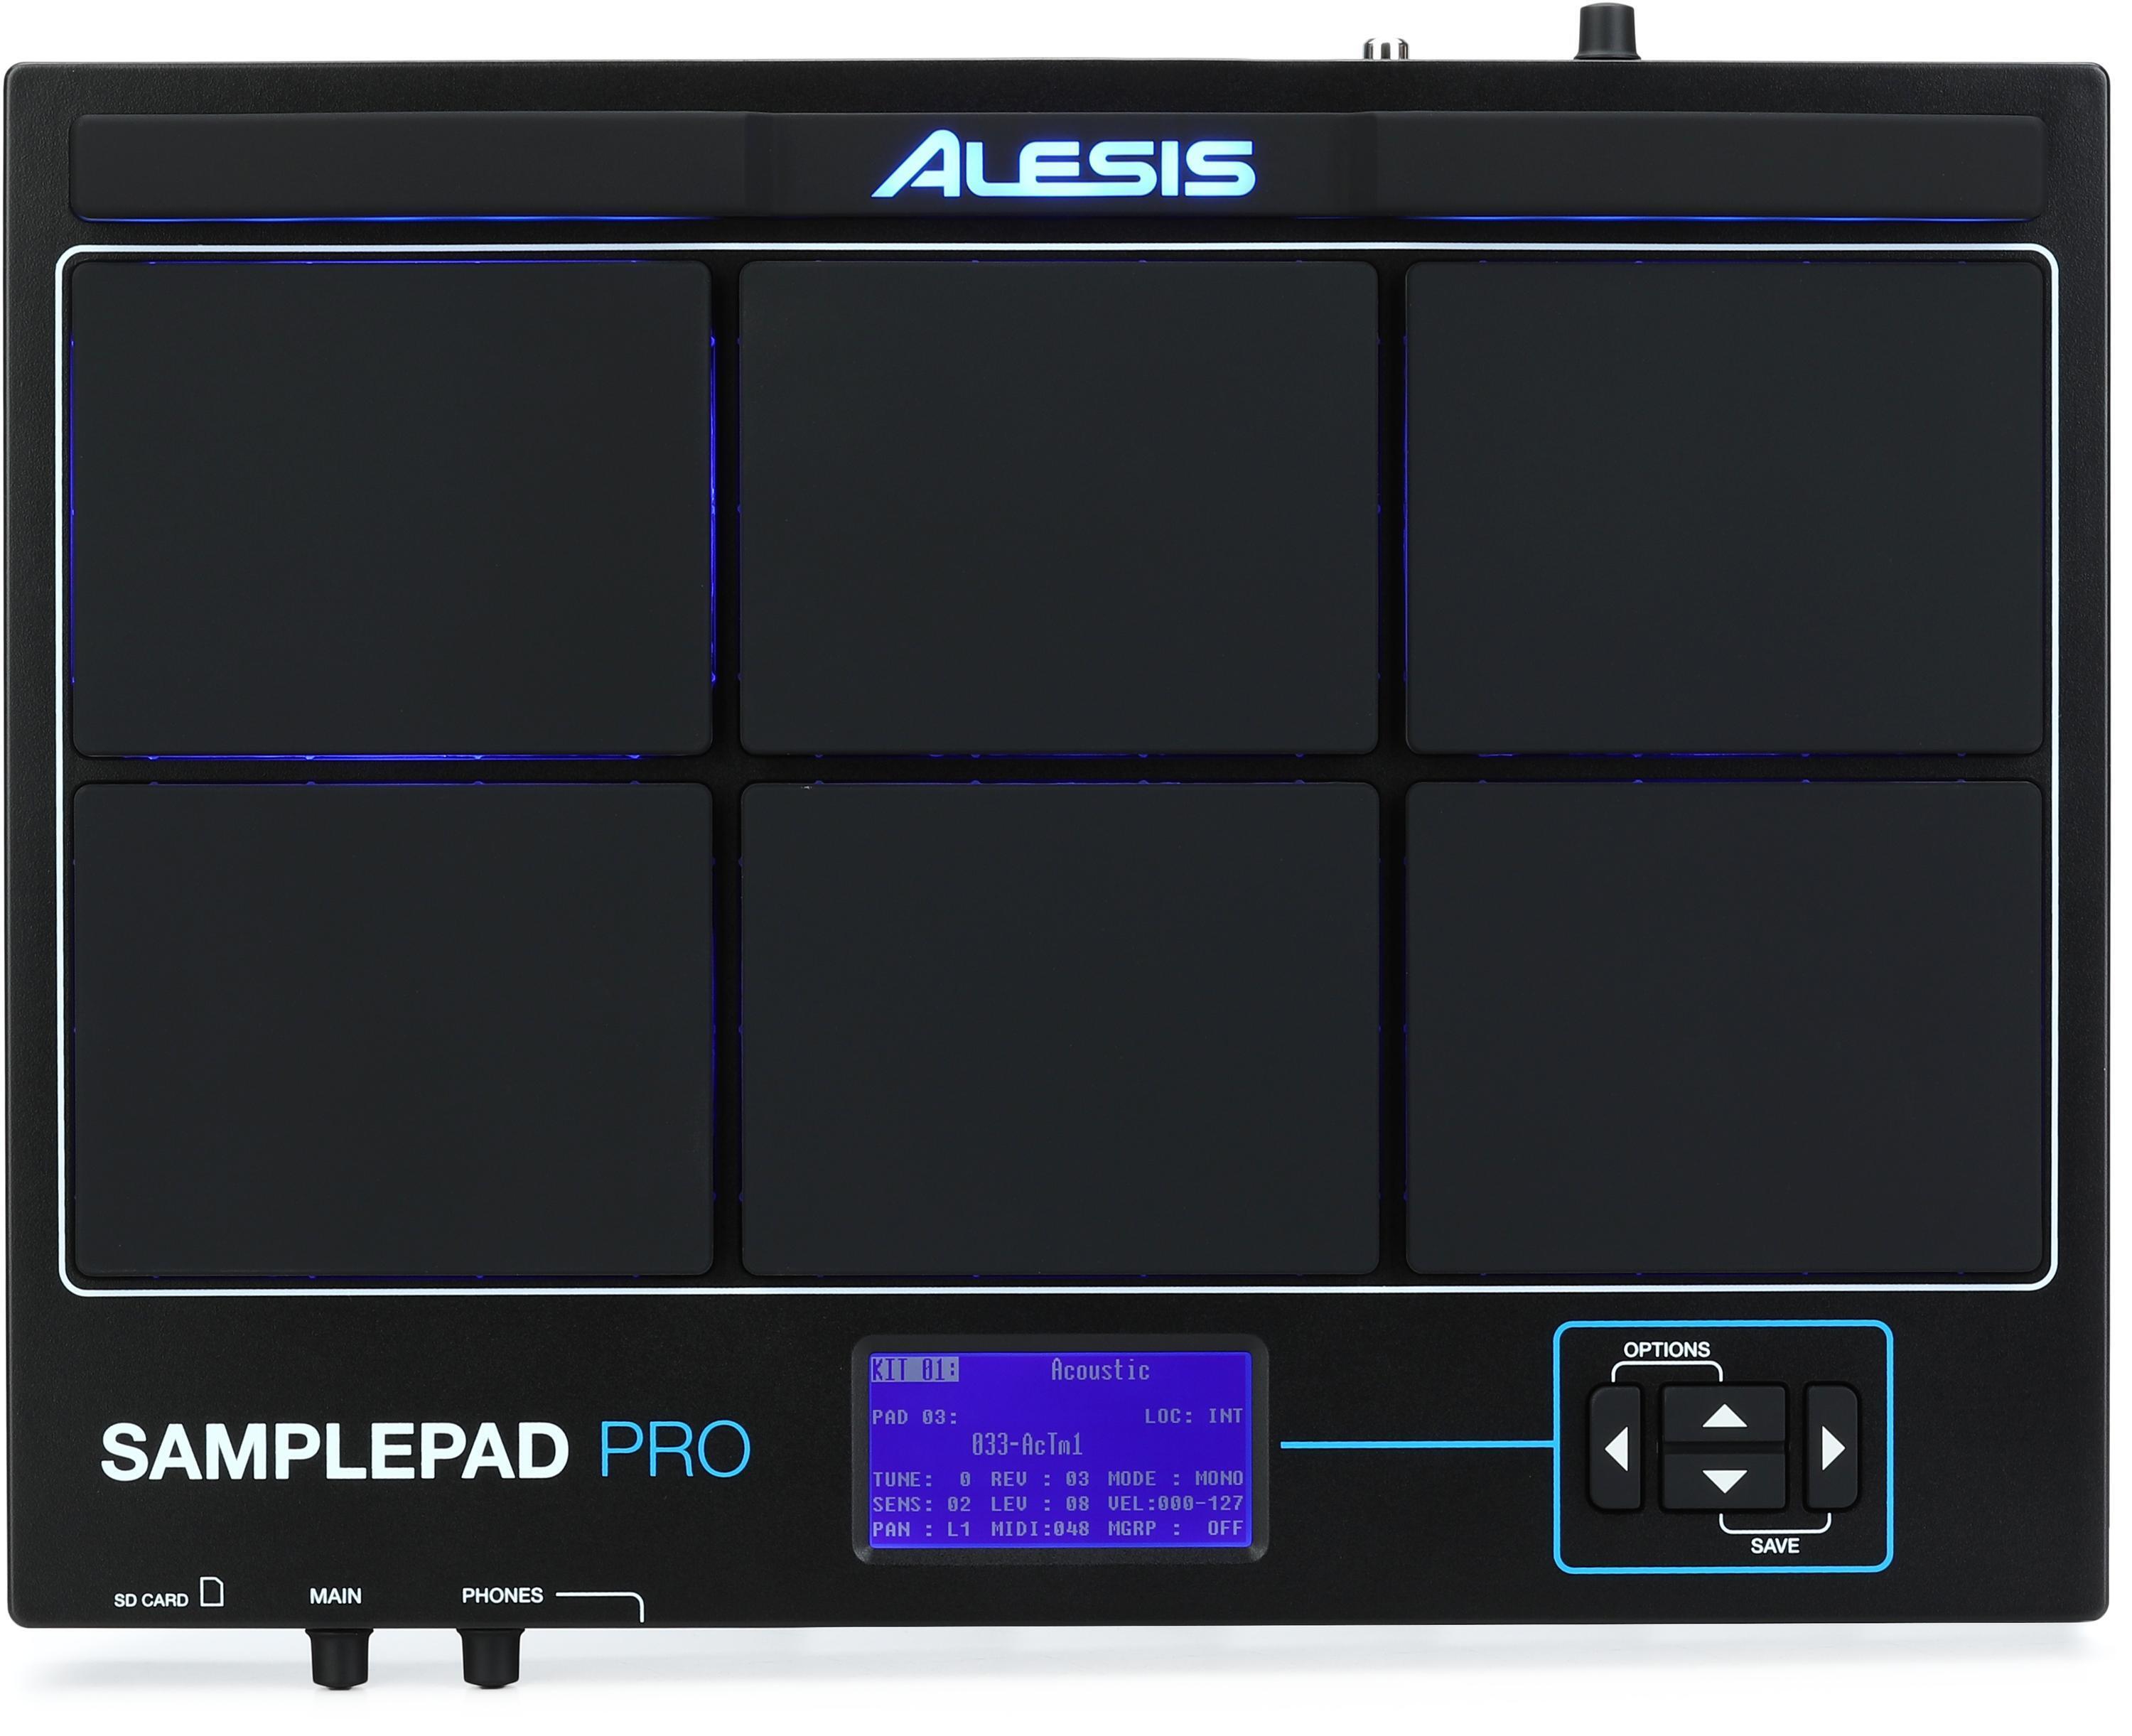 Bundled Item: Alesis SamplePad Pro Percussion Pad